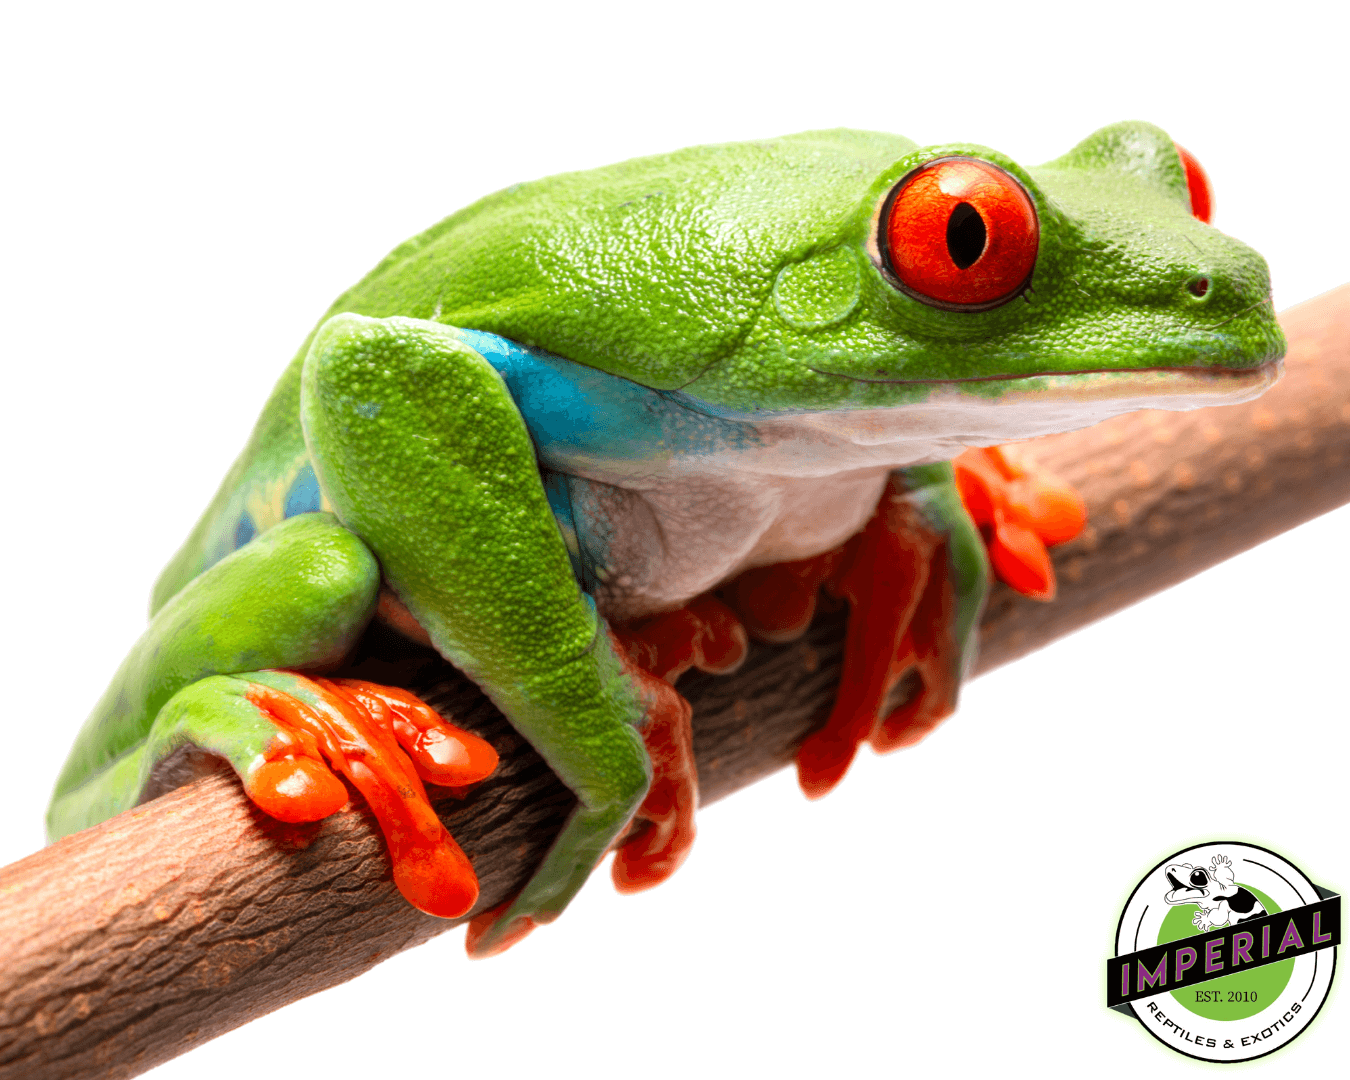 red eye tree frog for sale, buy amphibians online